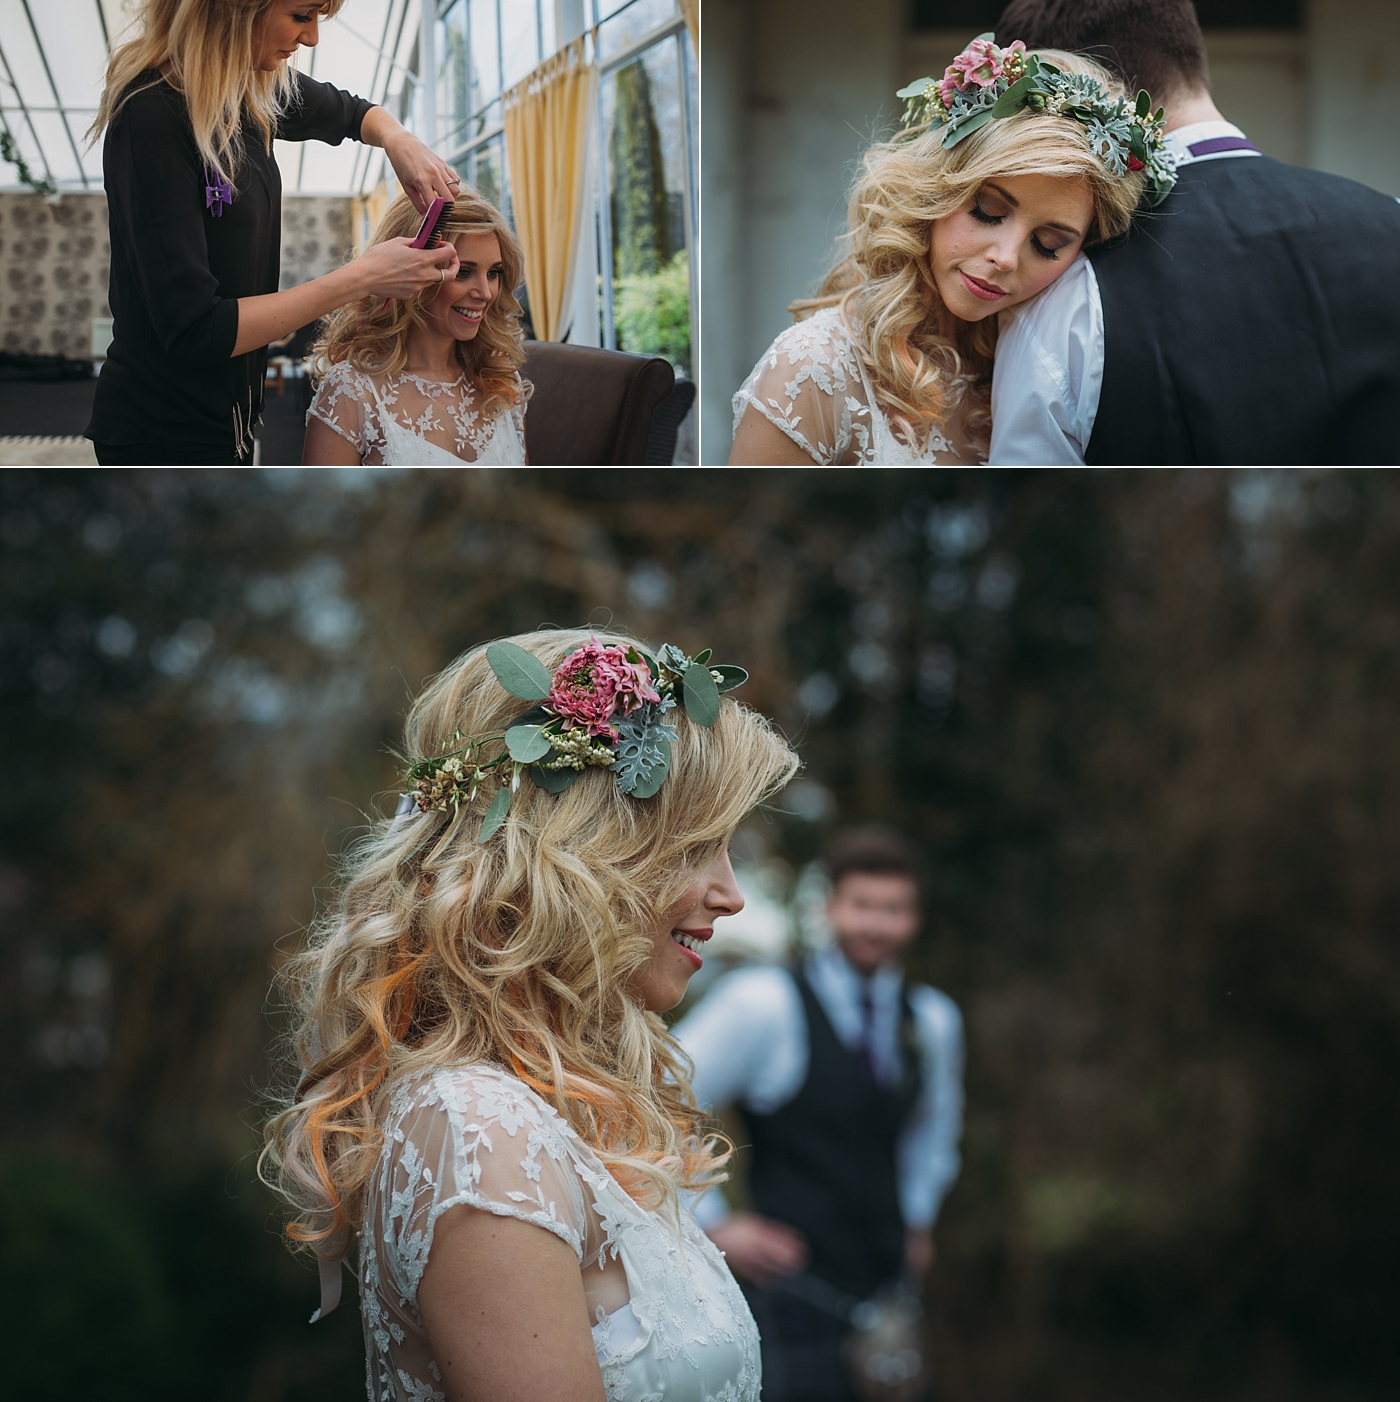 Jennifer Thomson Hair styling a boho bride for an elopement